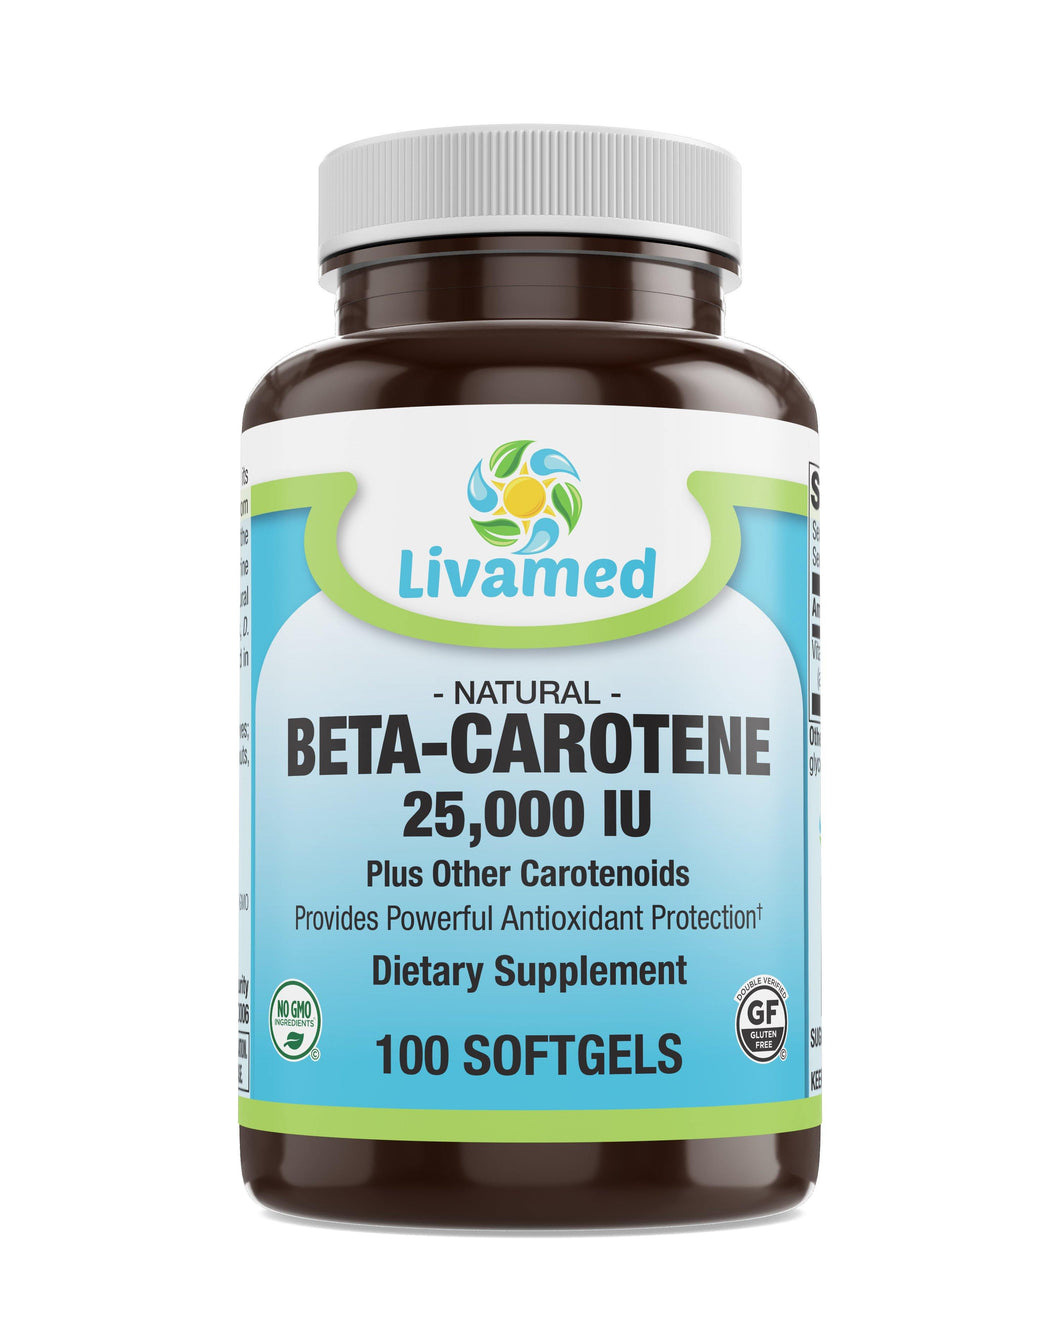 Livamed - Natural Beta Carotene 25,000 IU Softgels 100 Count - Livamed Vitamins